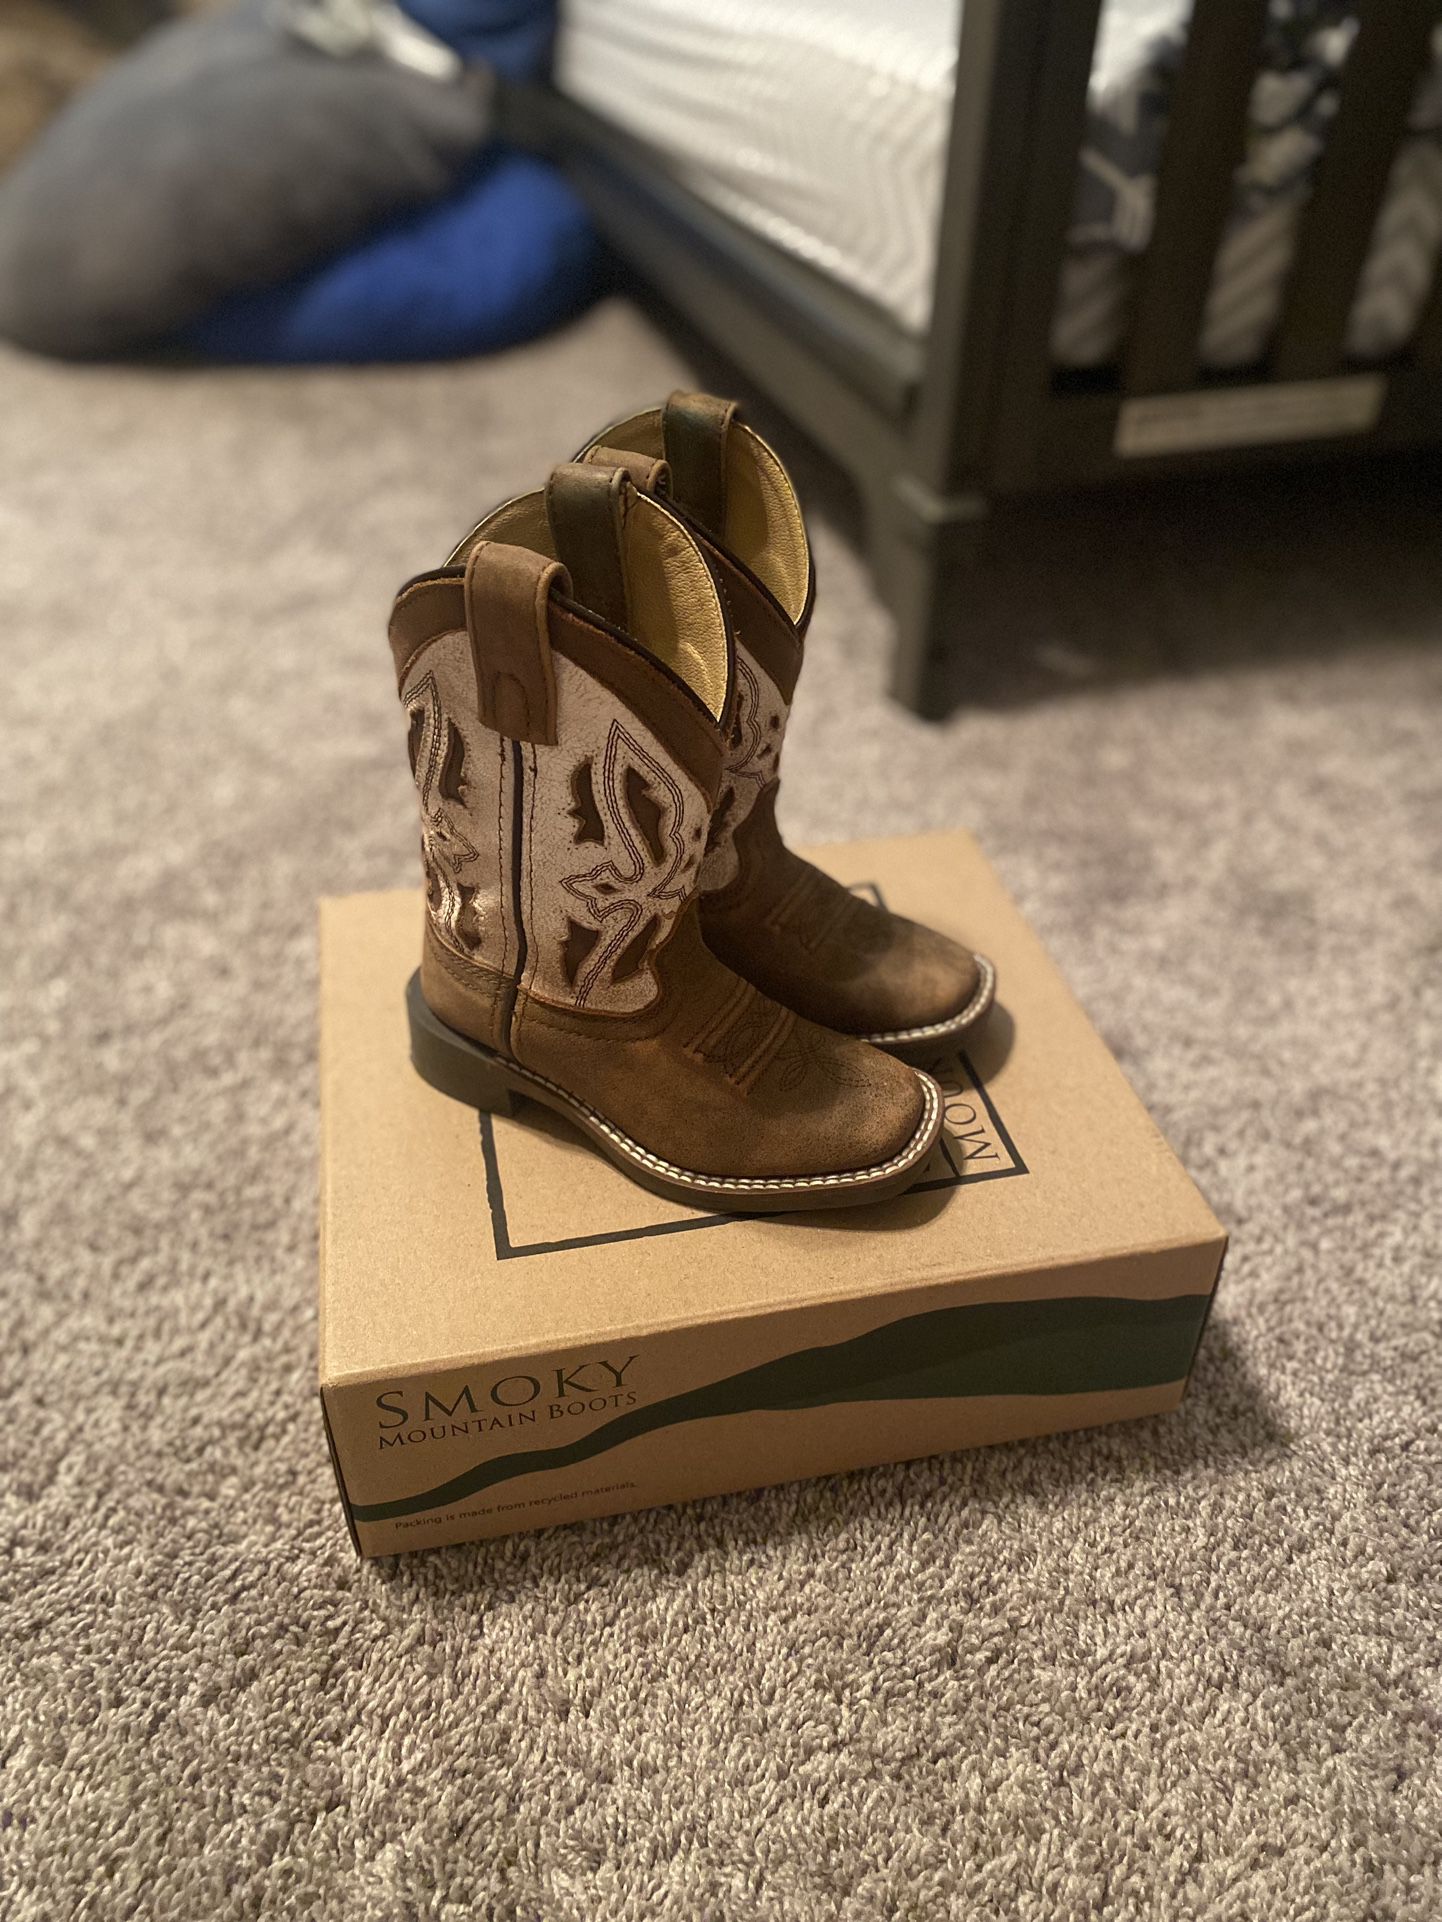 Toddler Boy Cowboy Boots